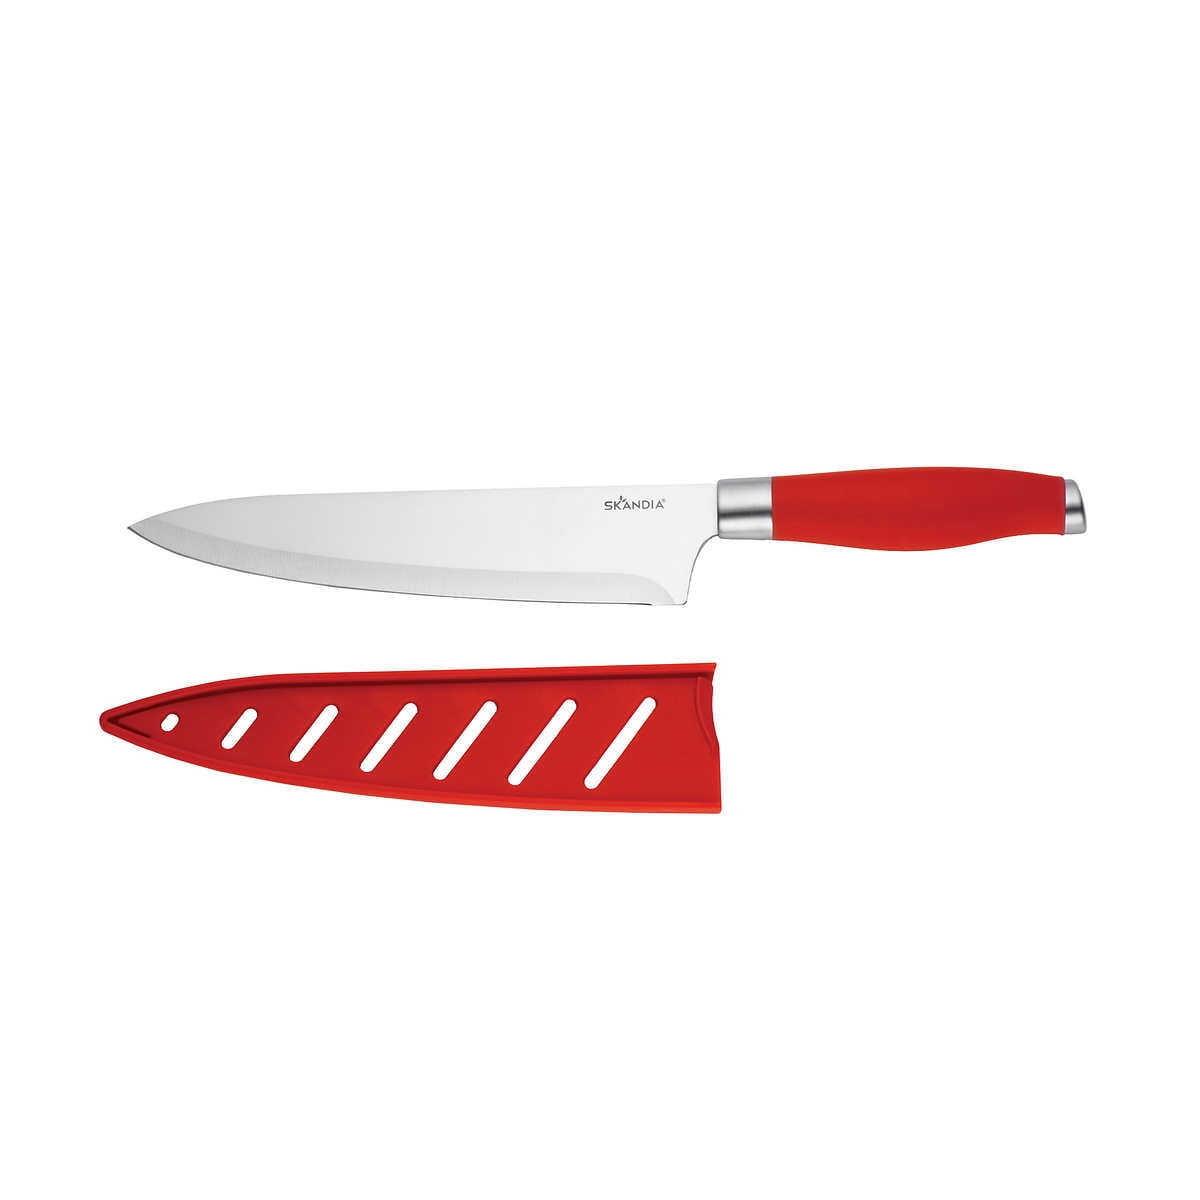 Hampton Forge Skandia Vivid Cream 4 PC Steak Knife Set Sfs19co4wb